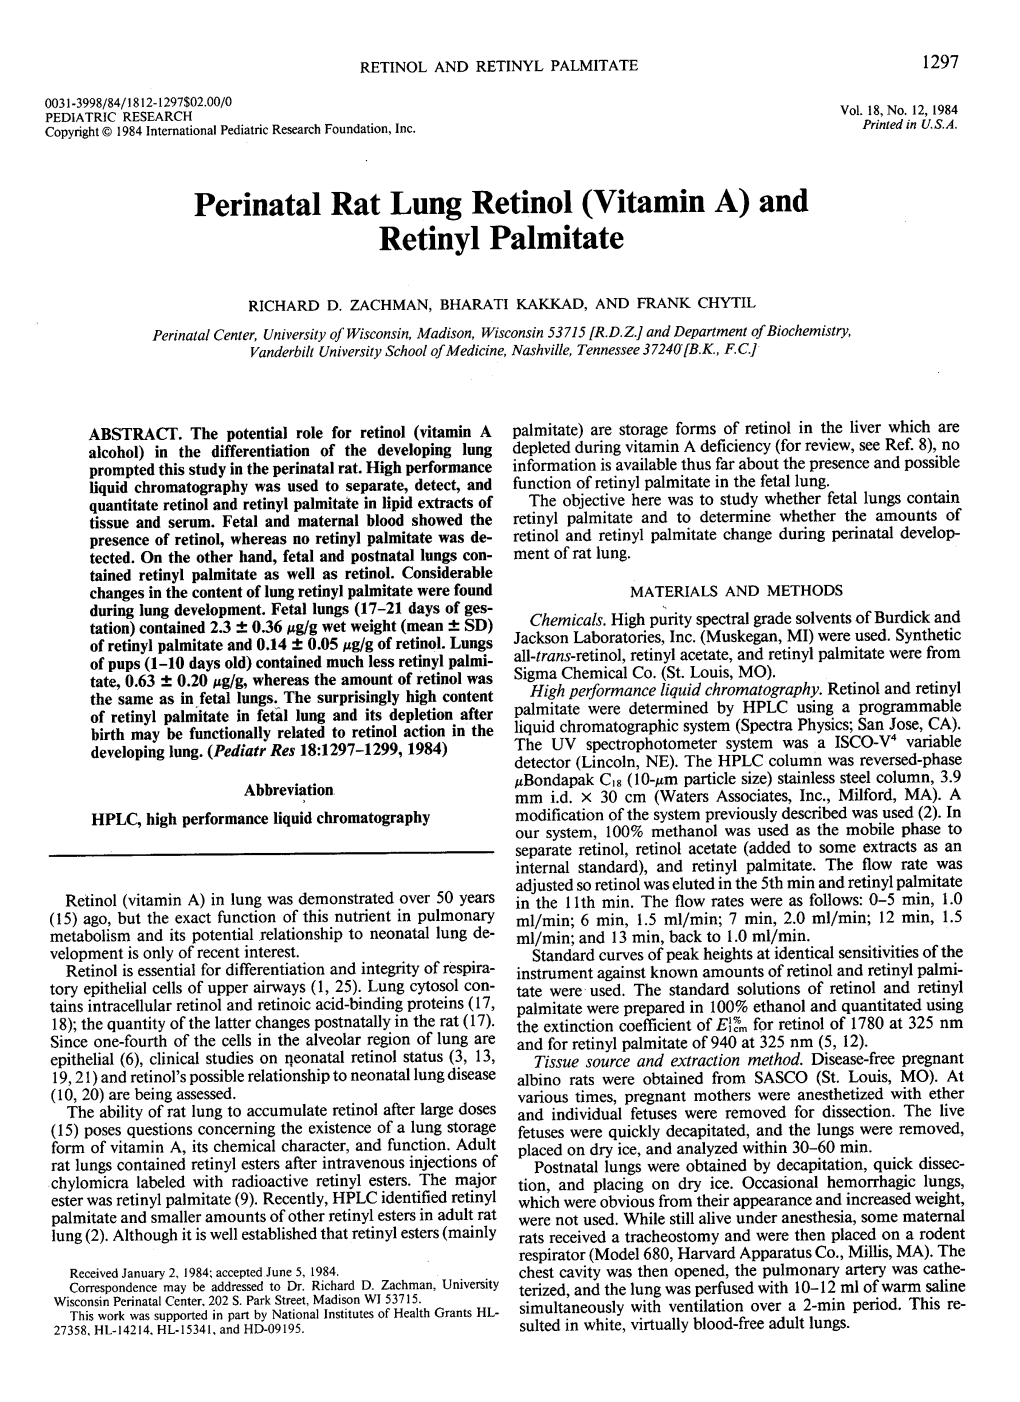 Perinatal Rat Lung Retinol (Vitamin A) and Retinyl Palmitate